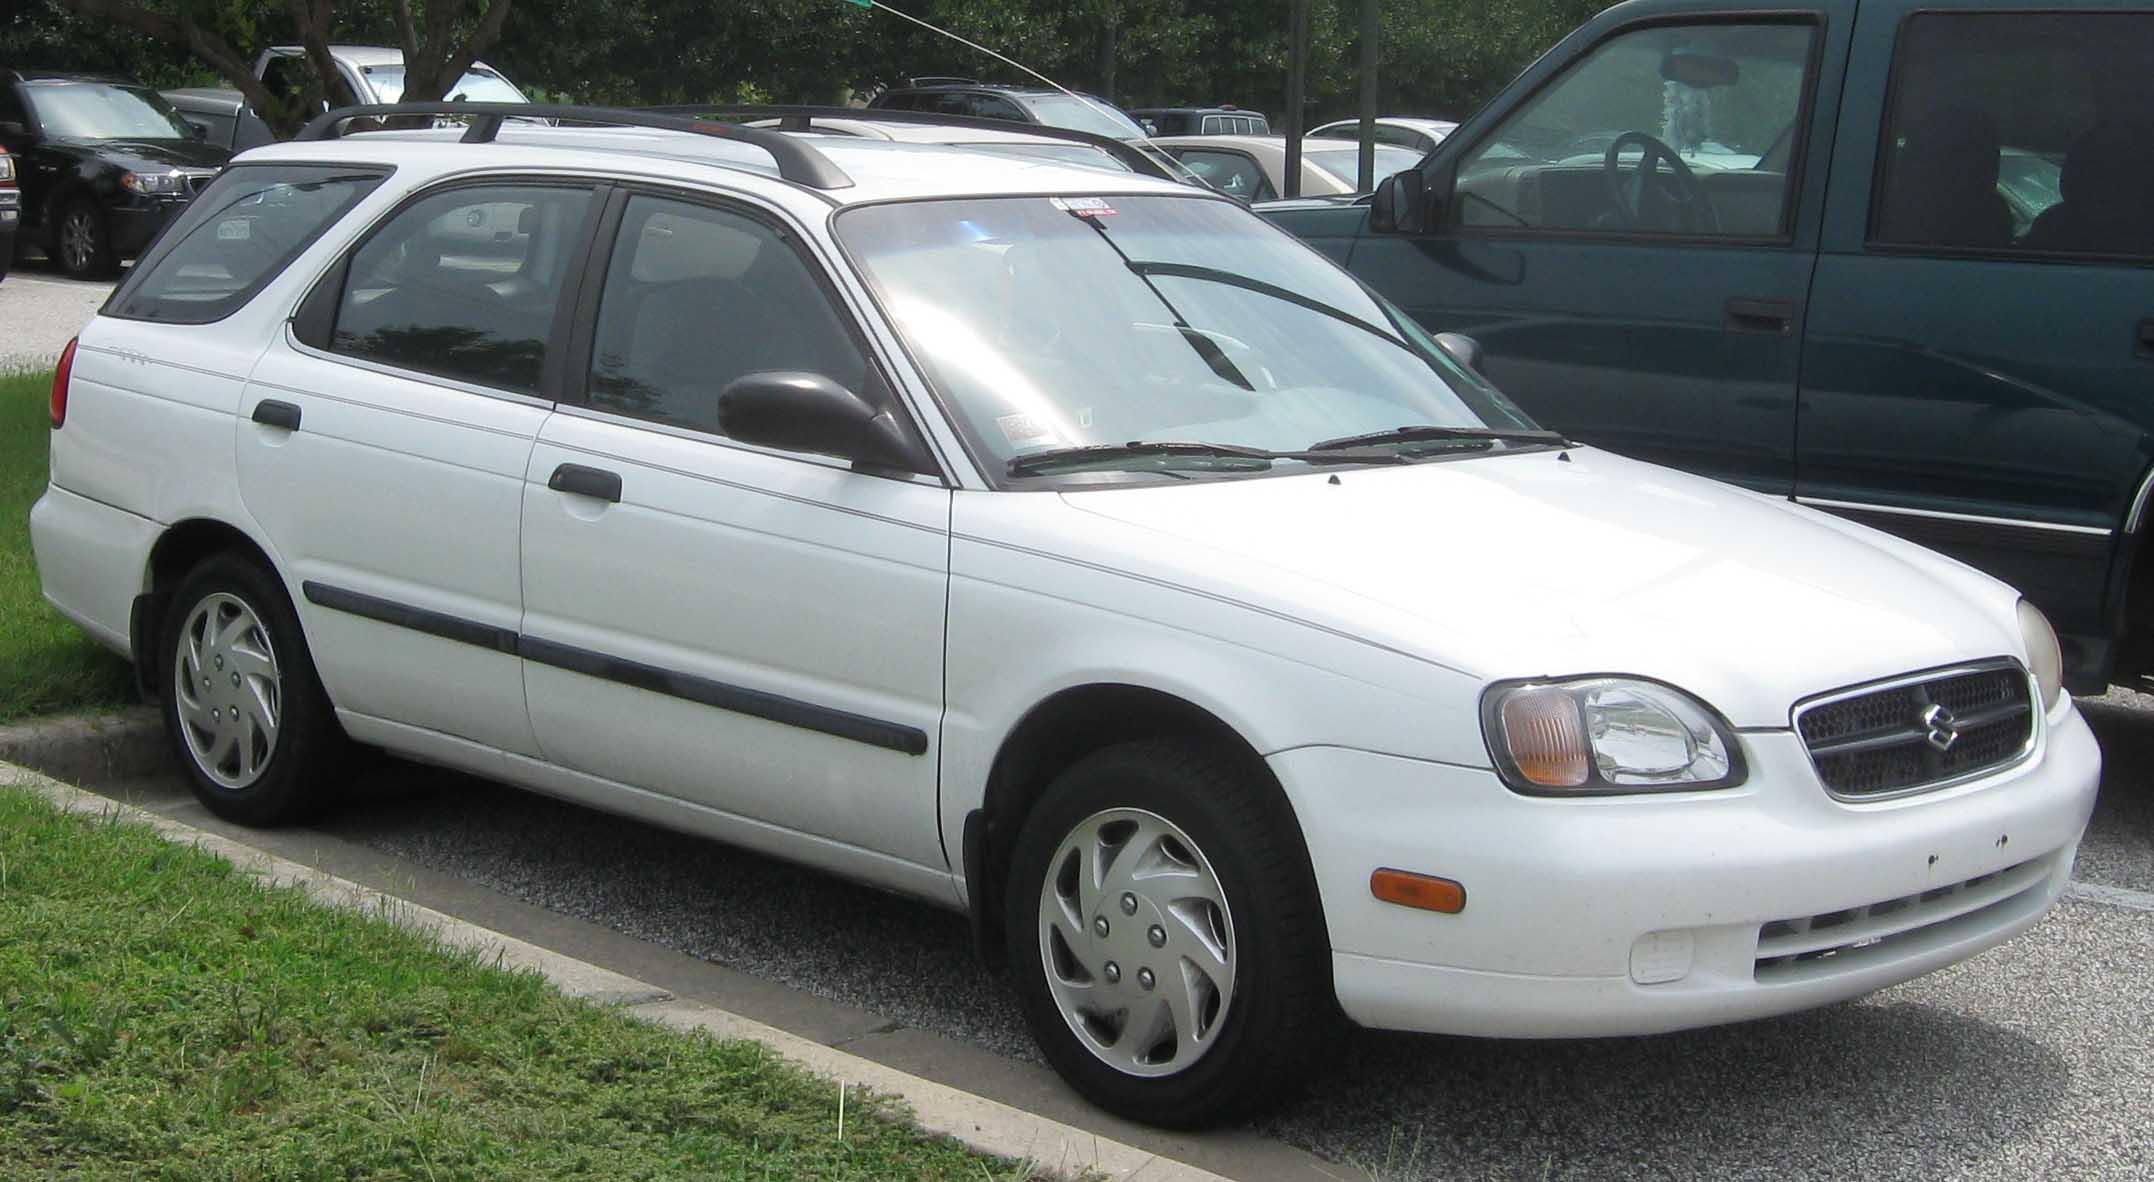 File:99-02 Suzuki Esteem wagon front.jpg - Wikimedia Commons